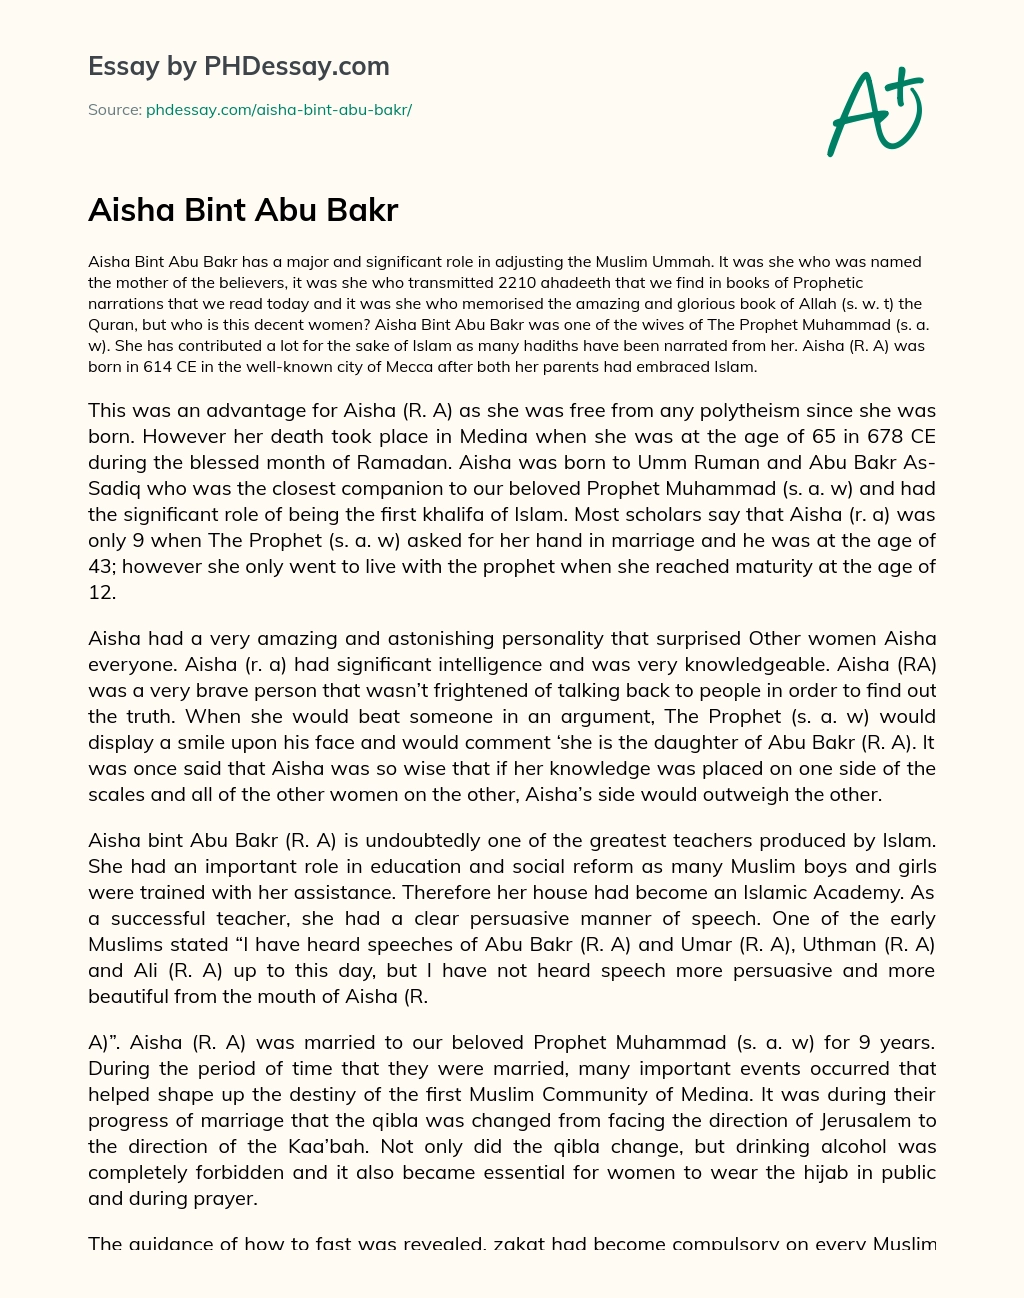 Aisha Bint Abu Bakr essay